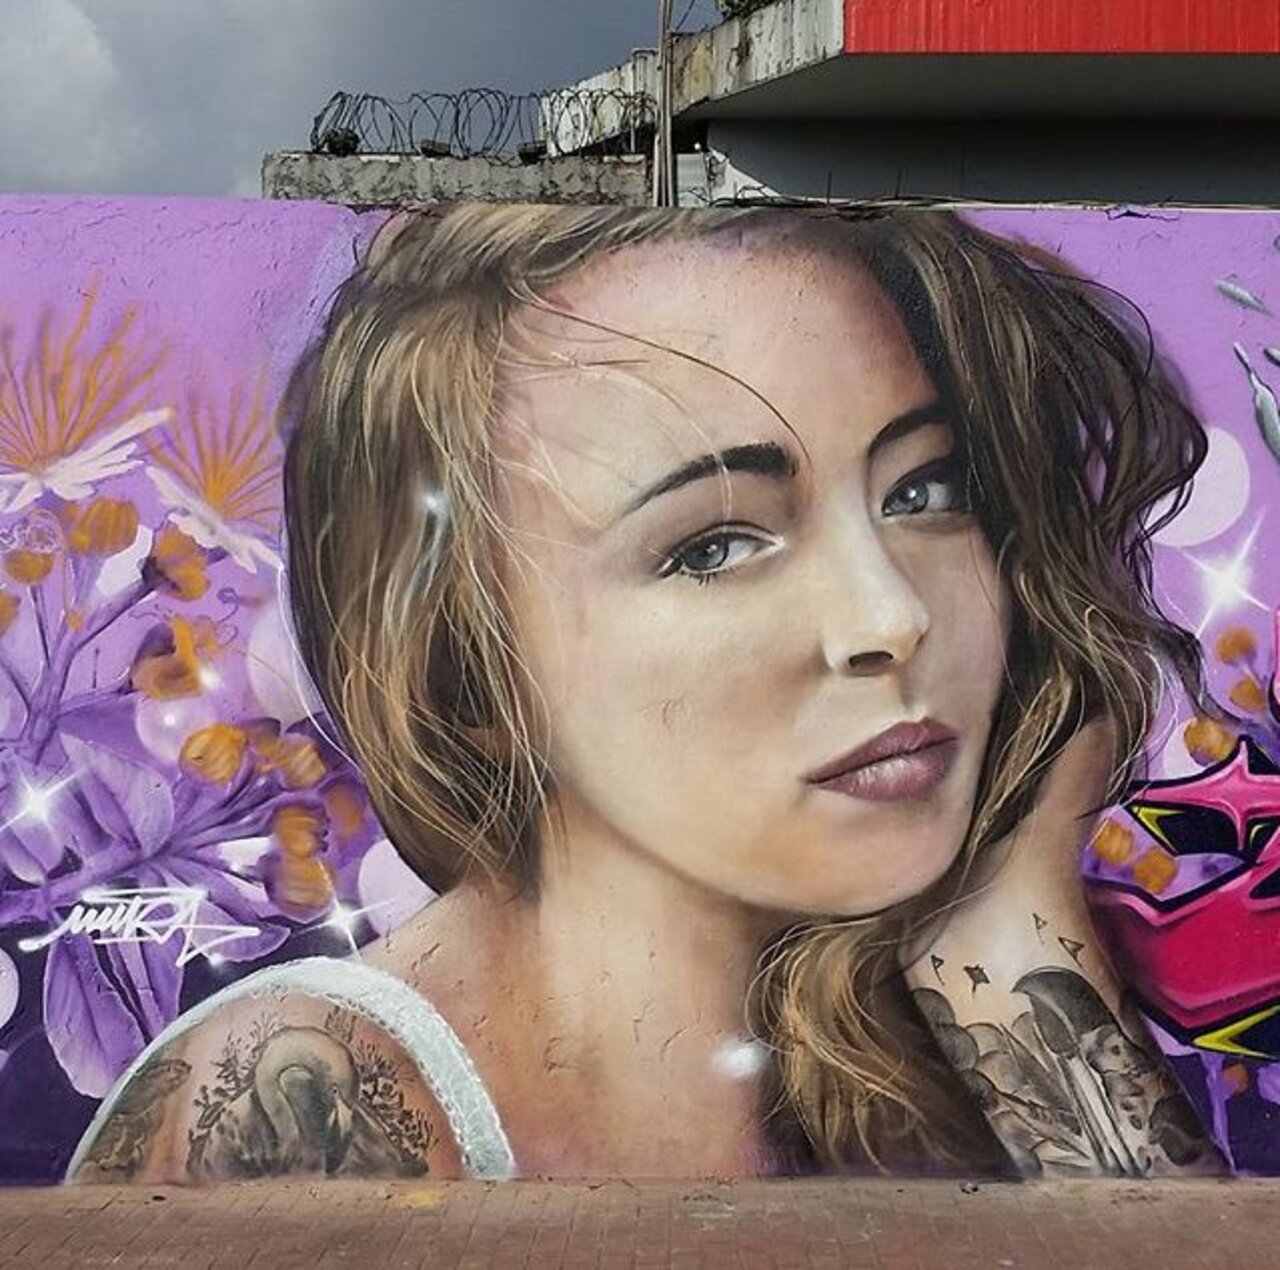 RT belilac "RT belilac "RT belilac "New Street Art by Mantarea 

#art #graffiti #mural #streetart https://t.co/U038PzVuGN"""